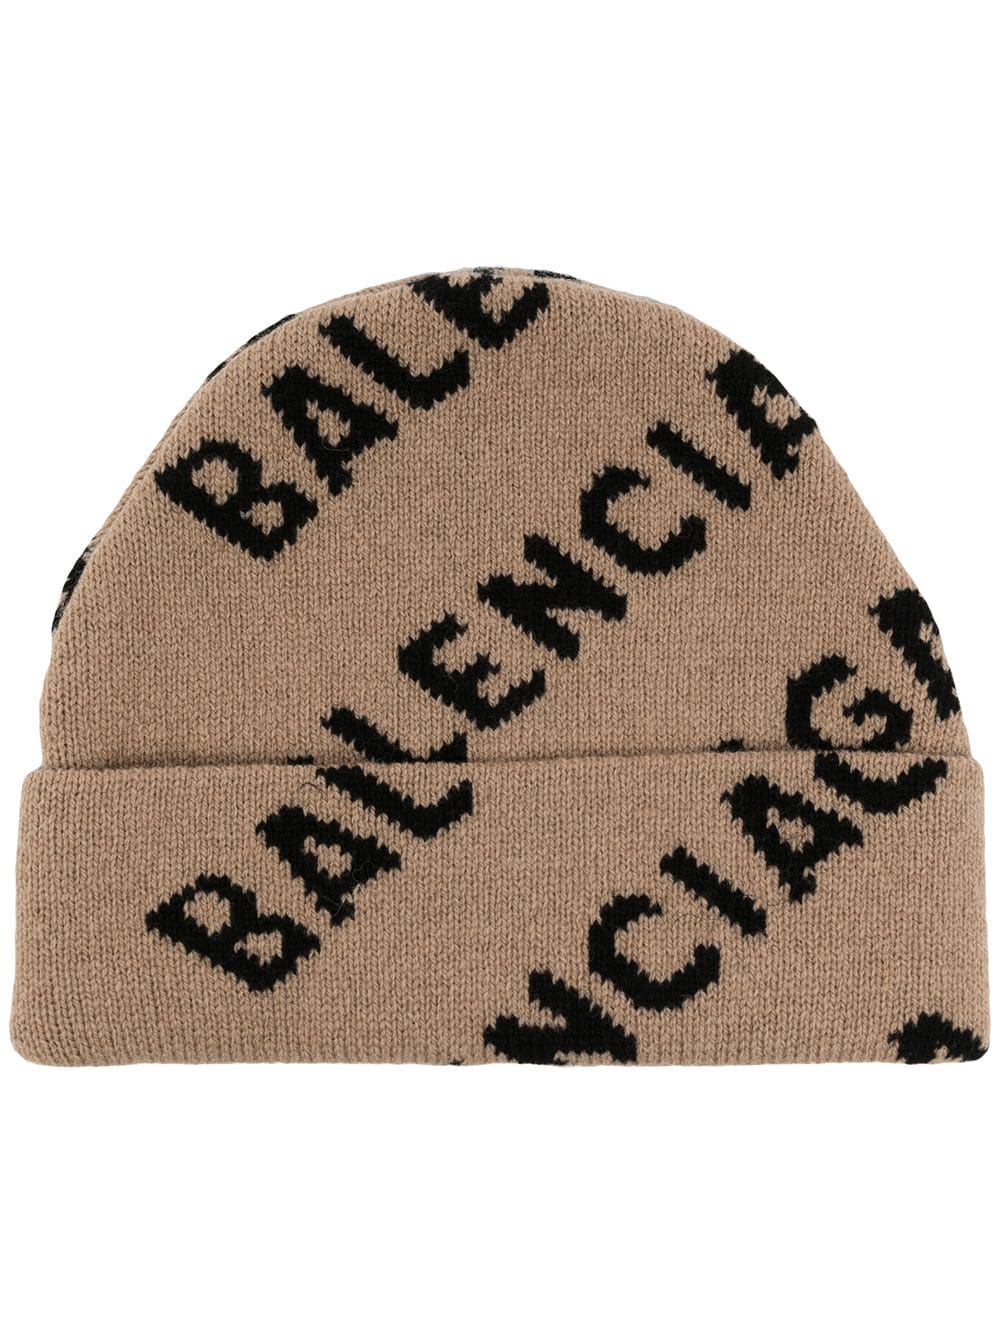 Balenciaga Intarsien-Mütze mit Logo - Nude von Balenciaga